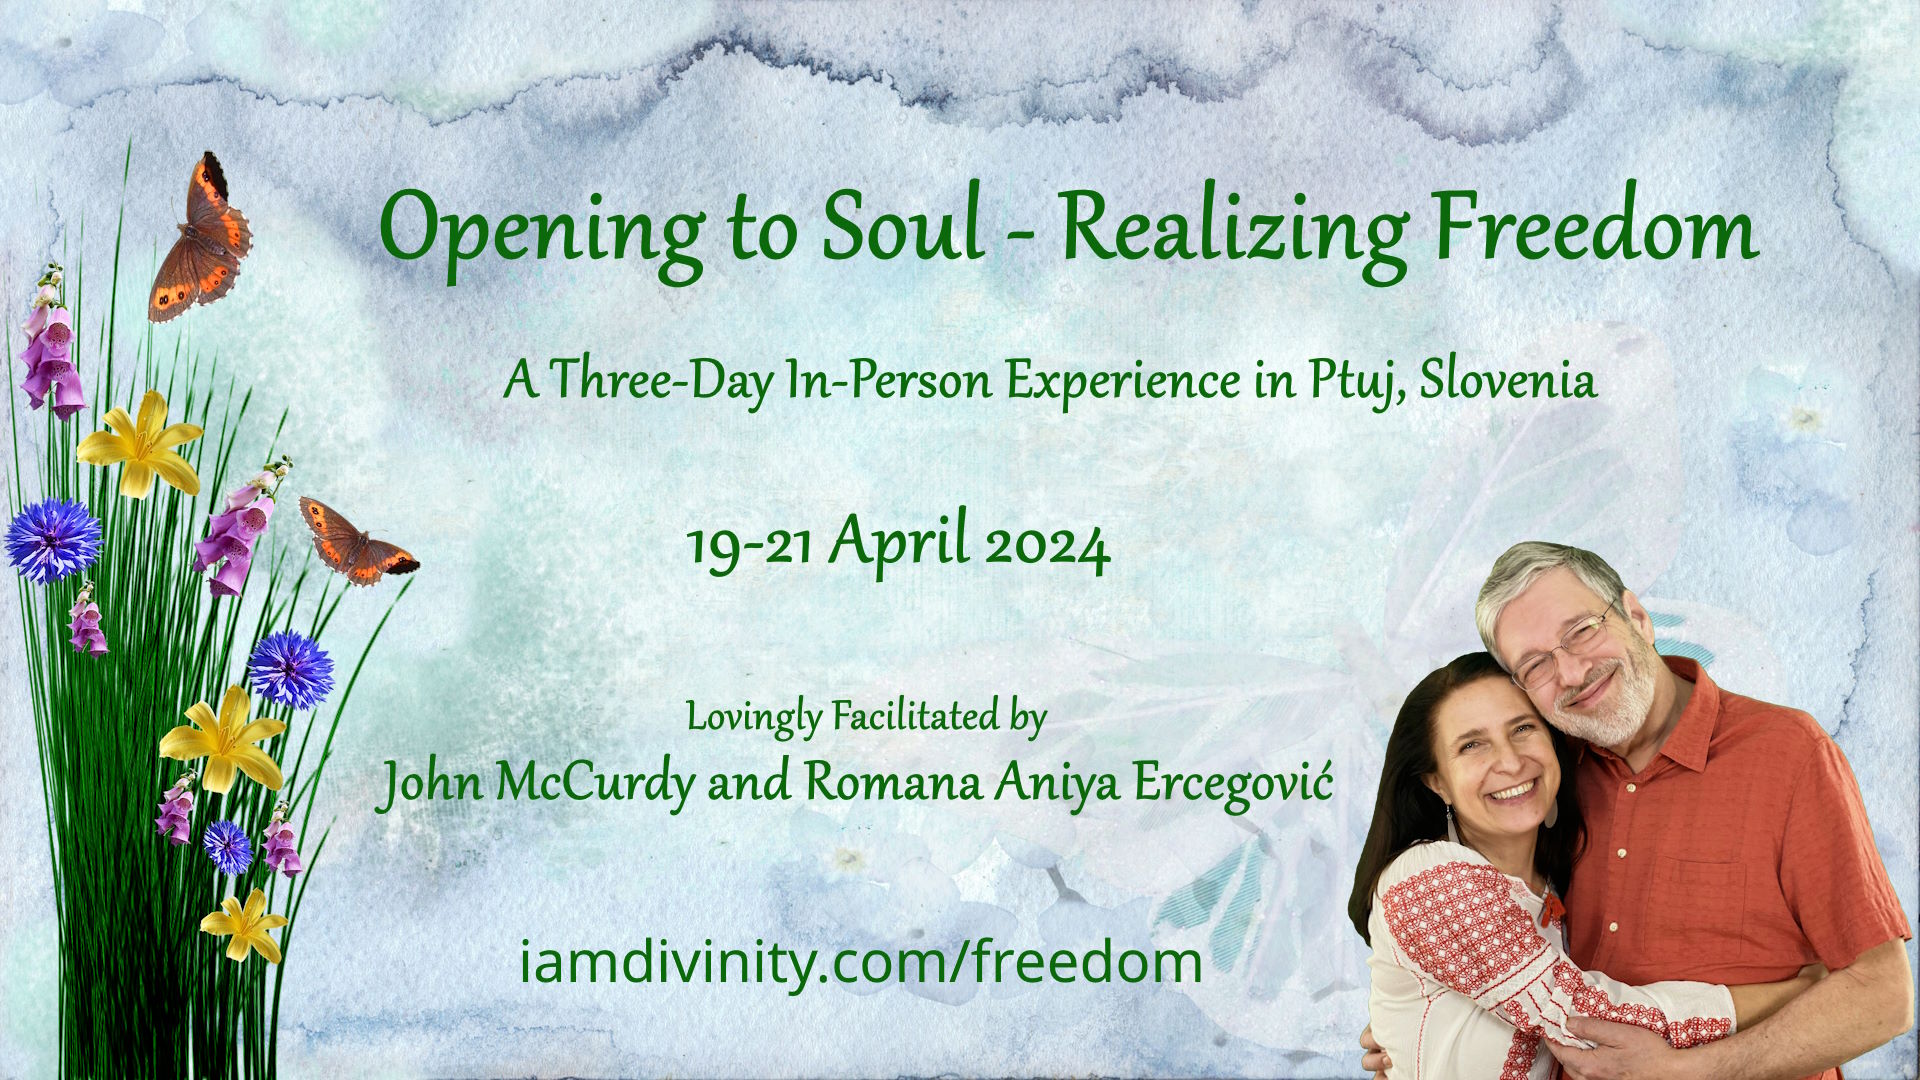 Opening to Soul - Realizing Freedom